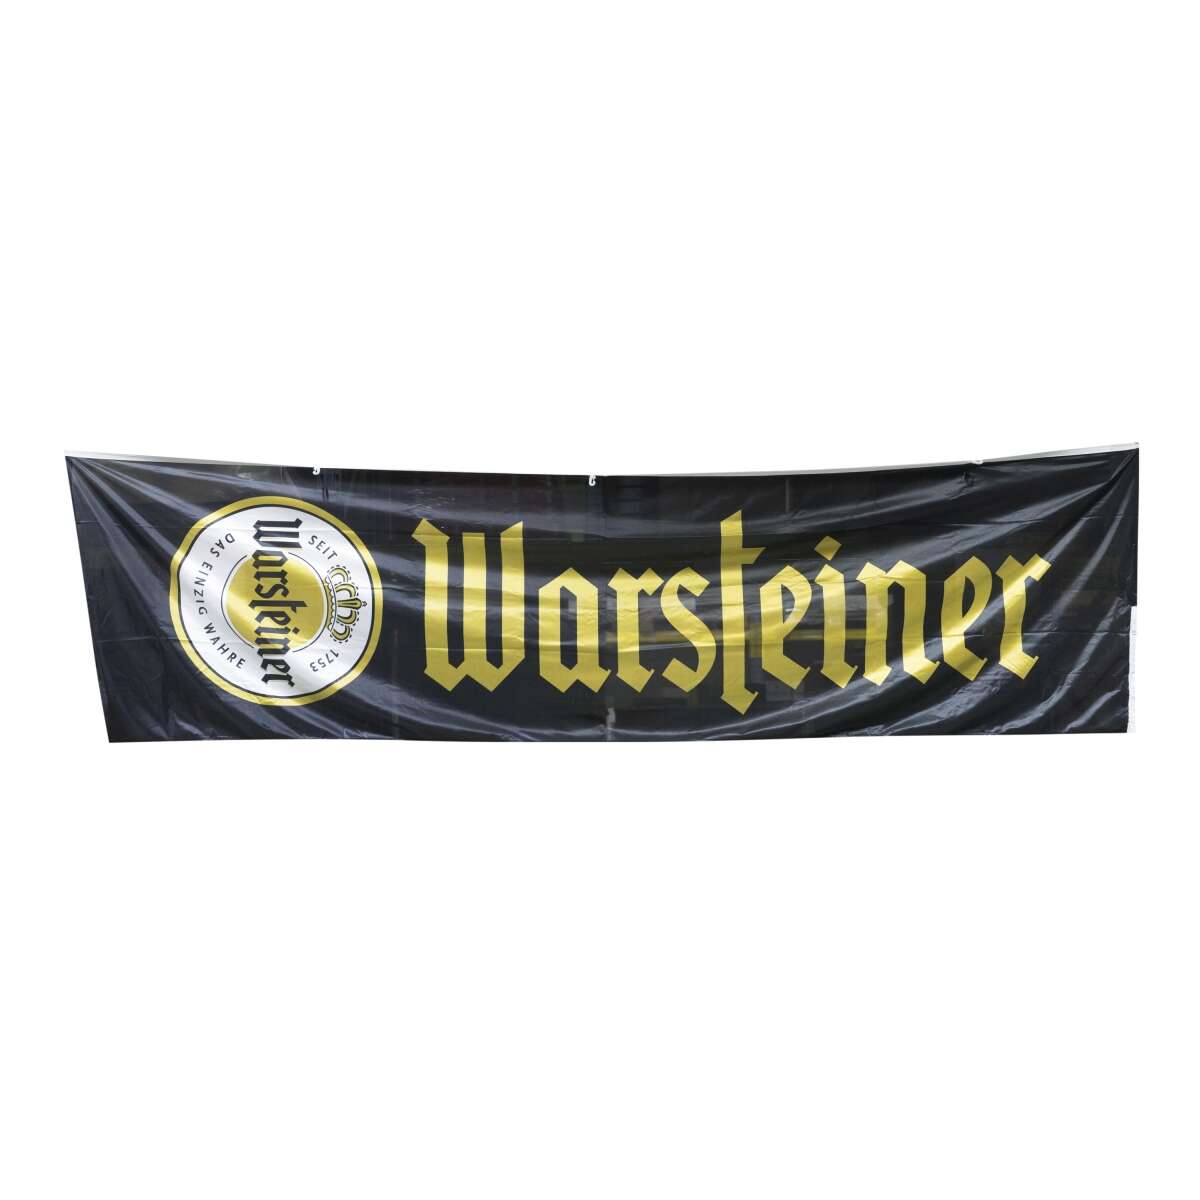 Acheter la bière Warsteiner Flagge en ligne - Barmeister24.de